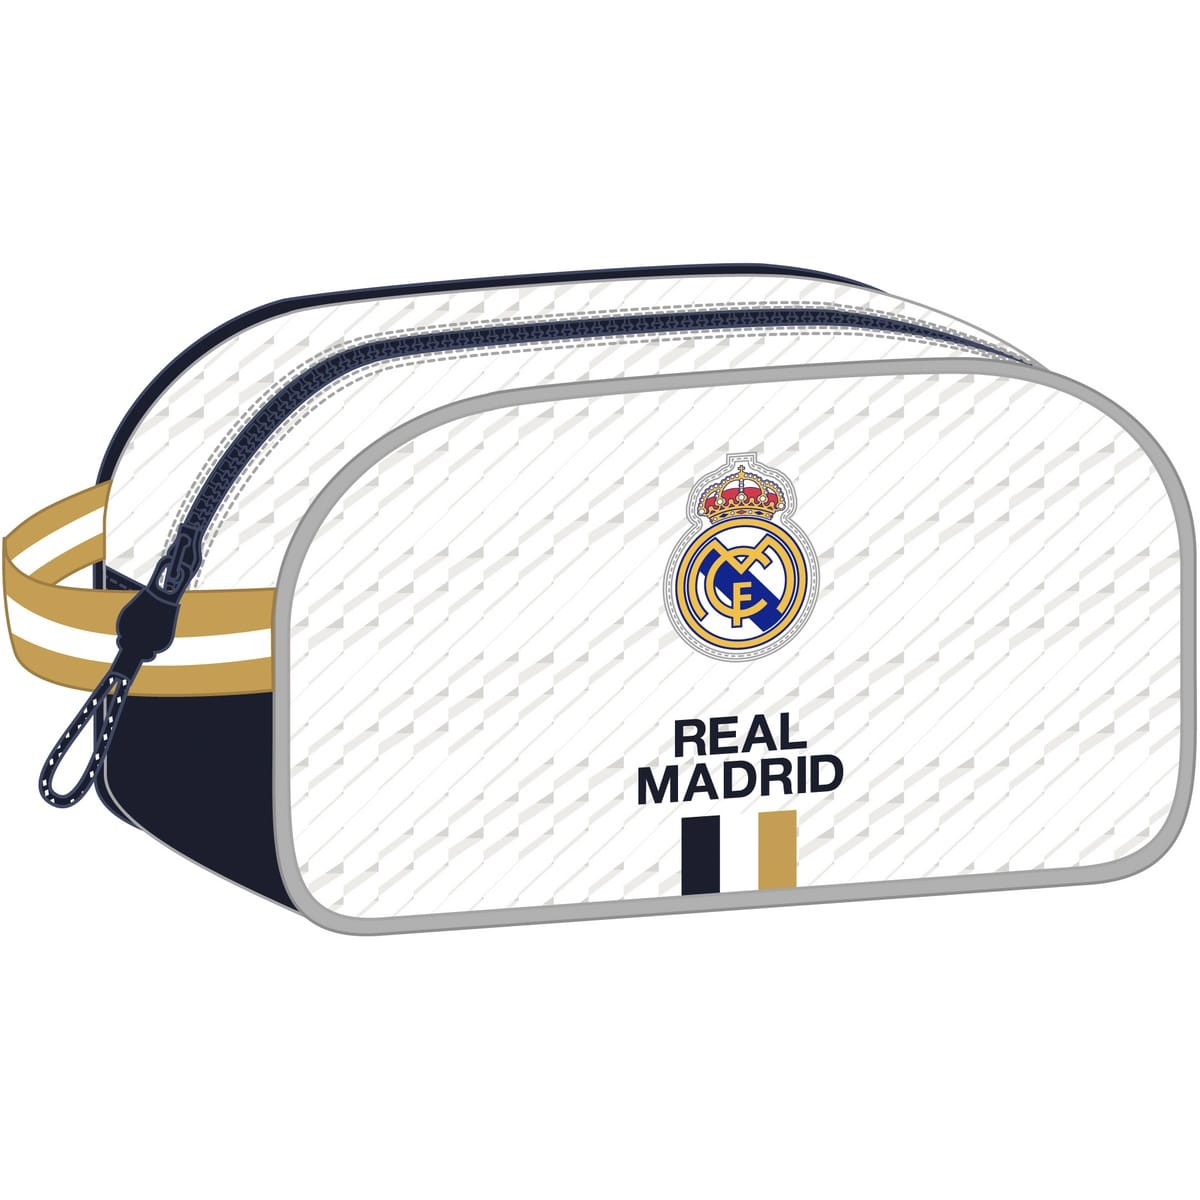 Neceser viaje Real Madrid